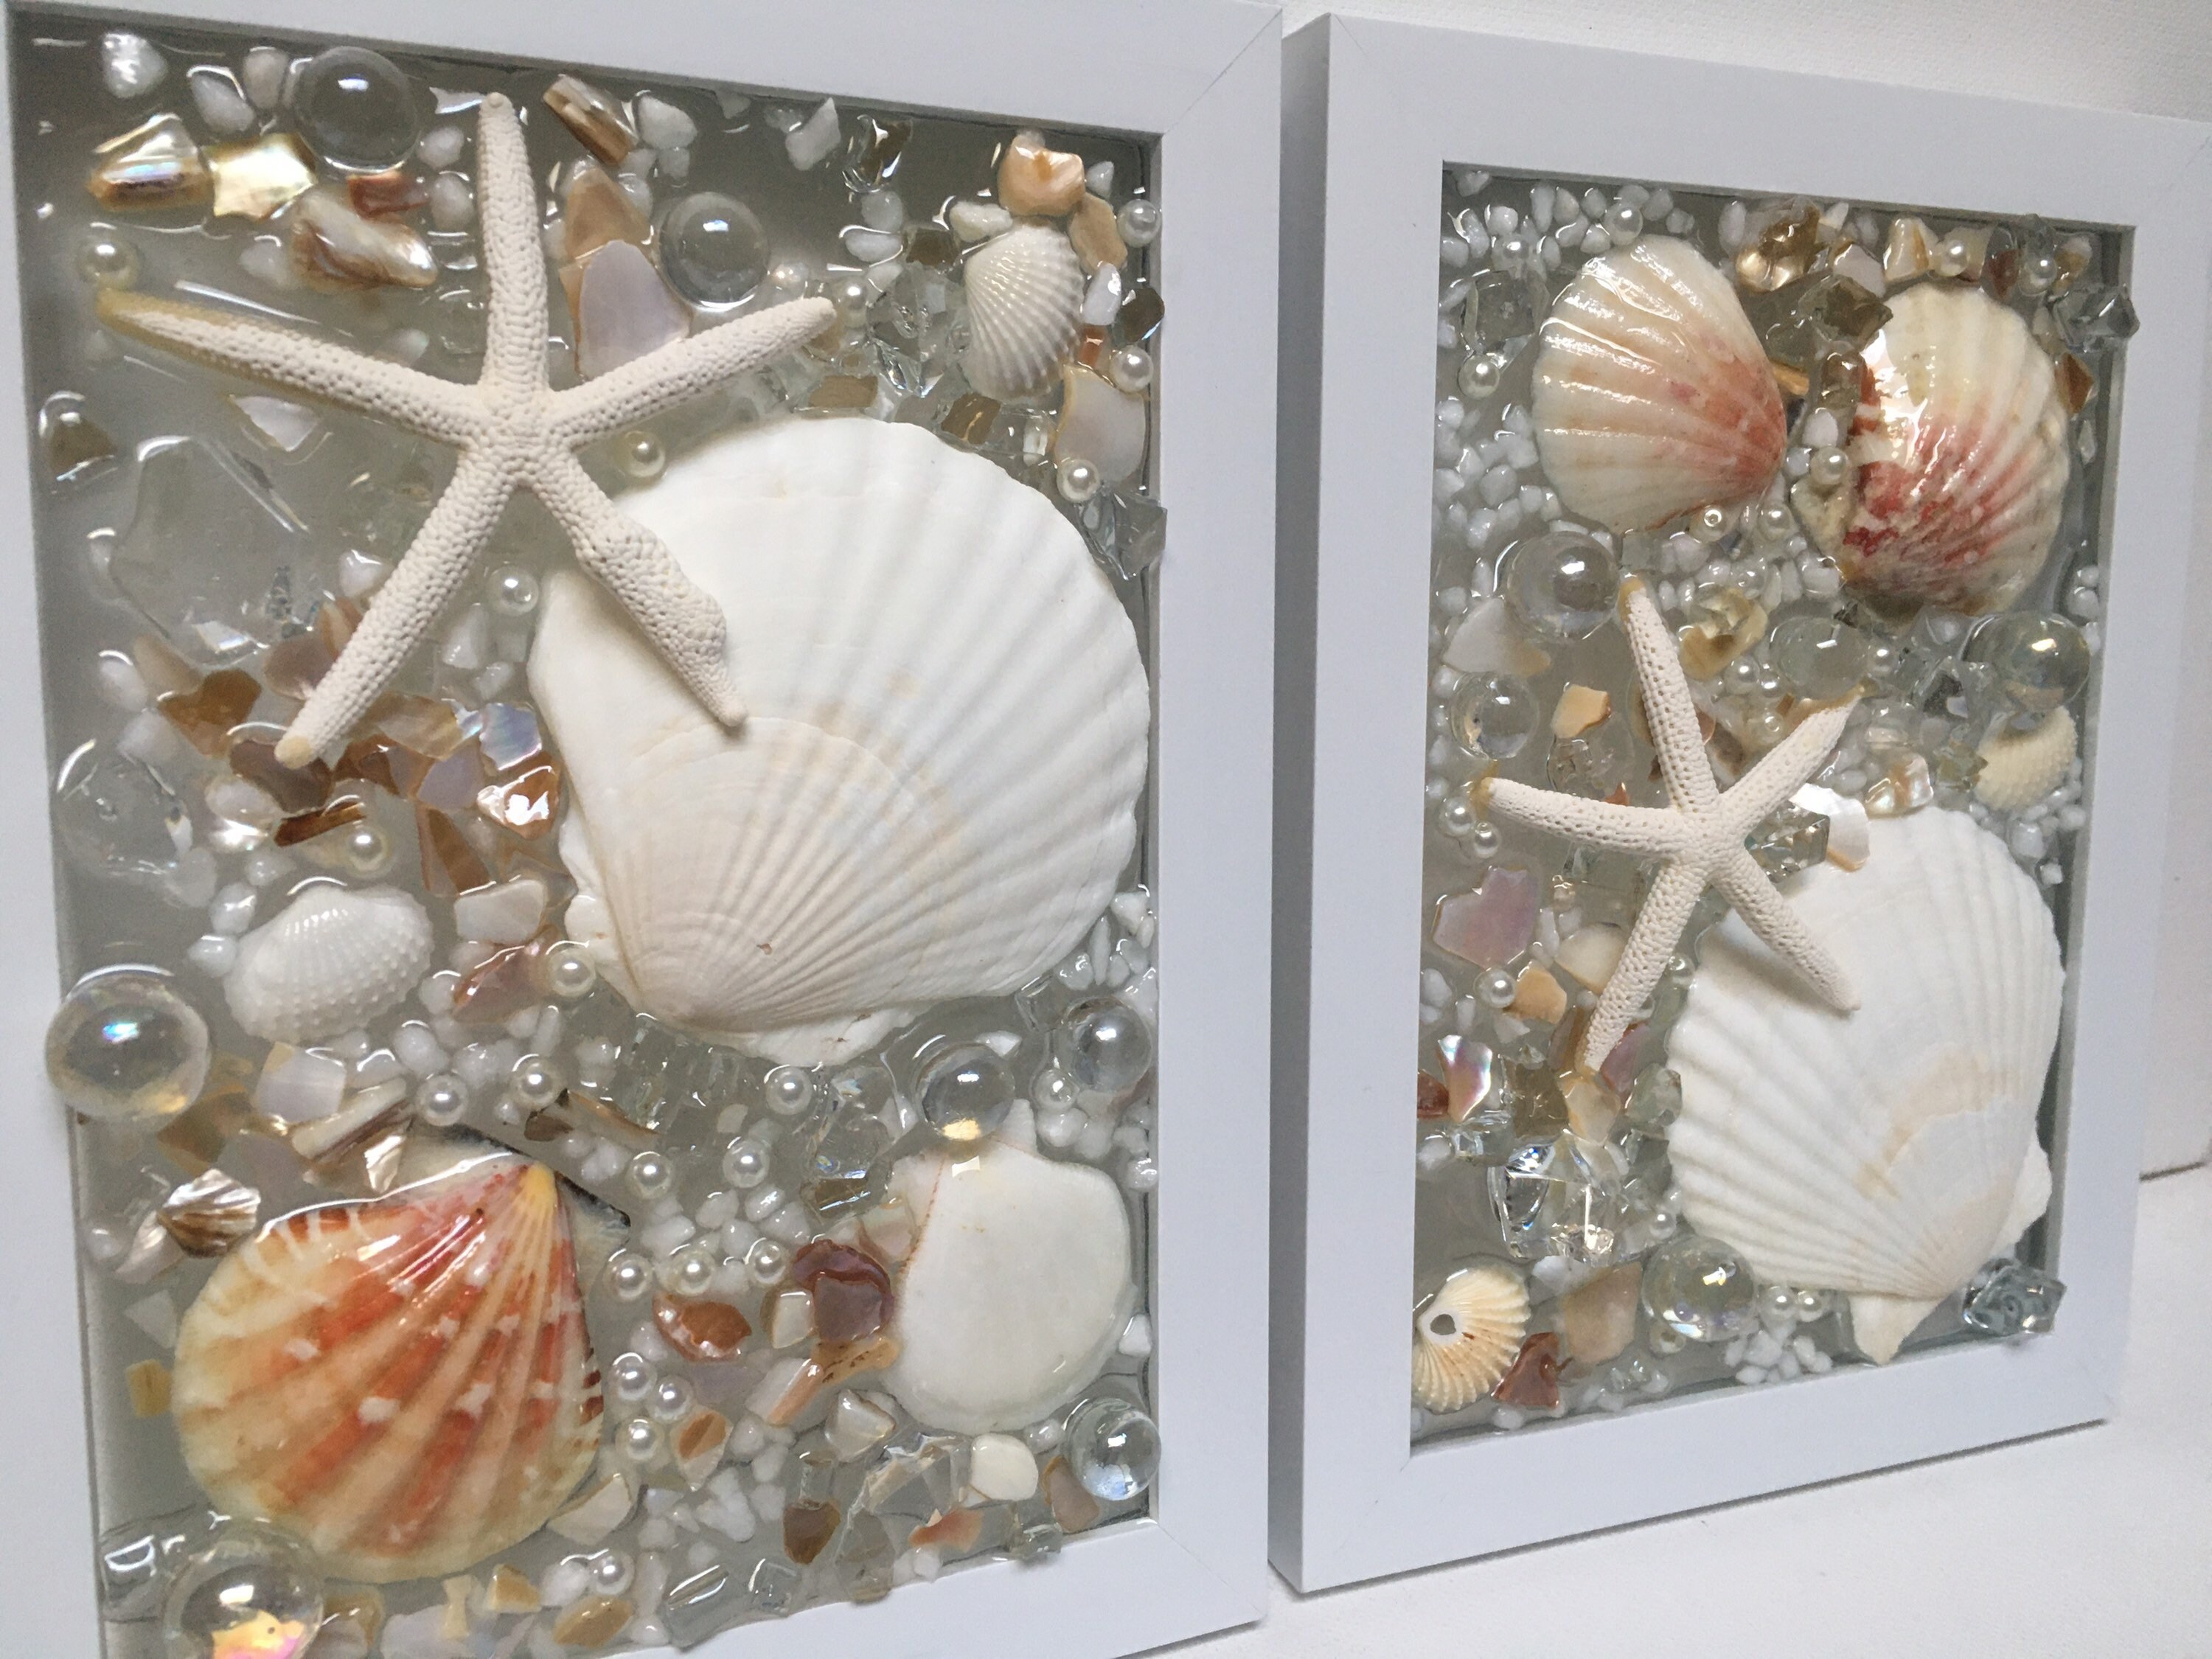 Seashell Decor/seaglass Wallart/beach Wall Art/coastal Decor/ocean Themed  Art/wall Art With Seashells/glass Wall Art/seashell Art for Wall 